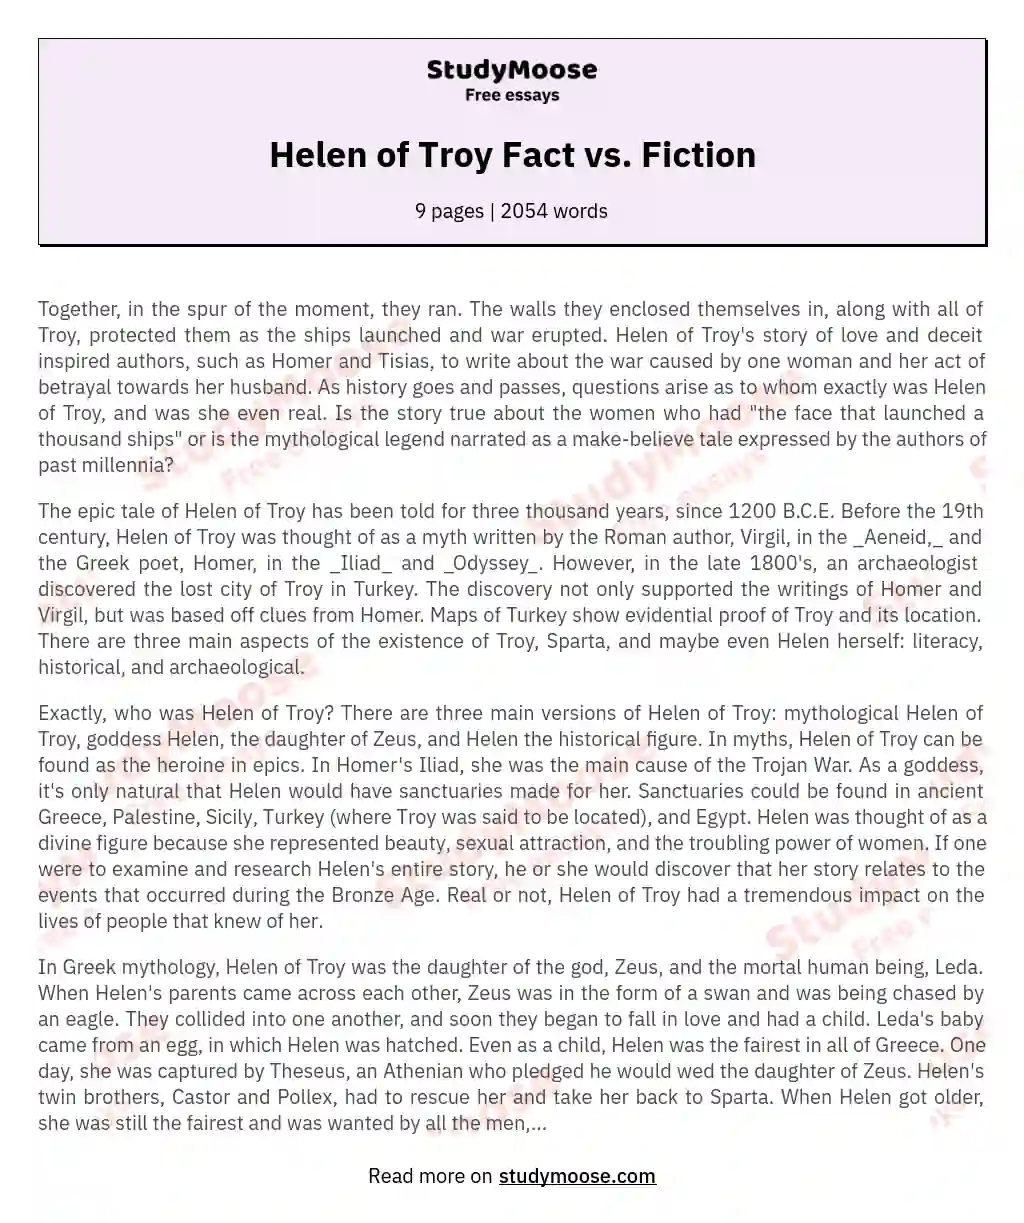 Helen of Troy Fact vs. Fiction